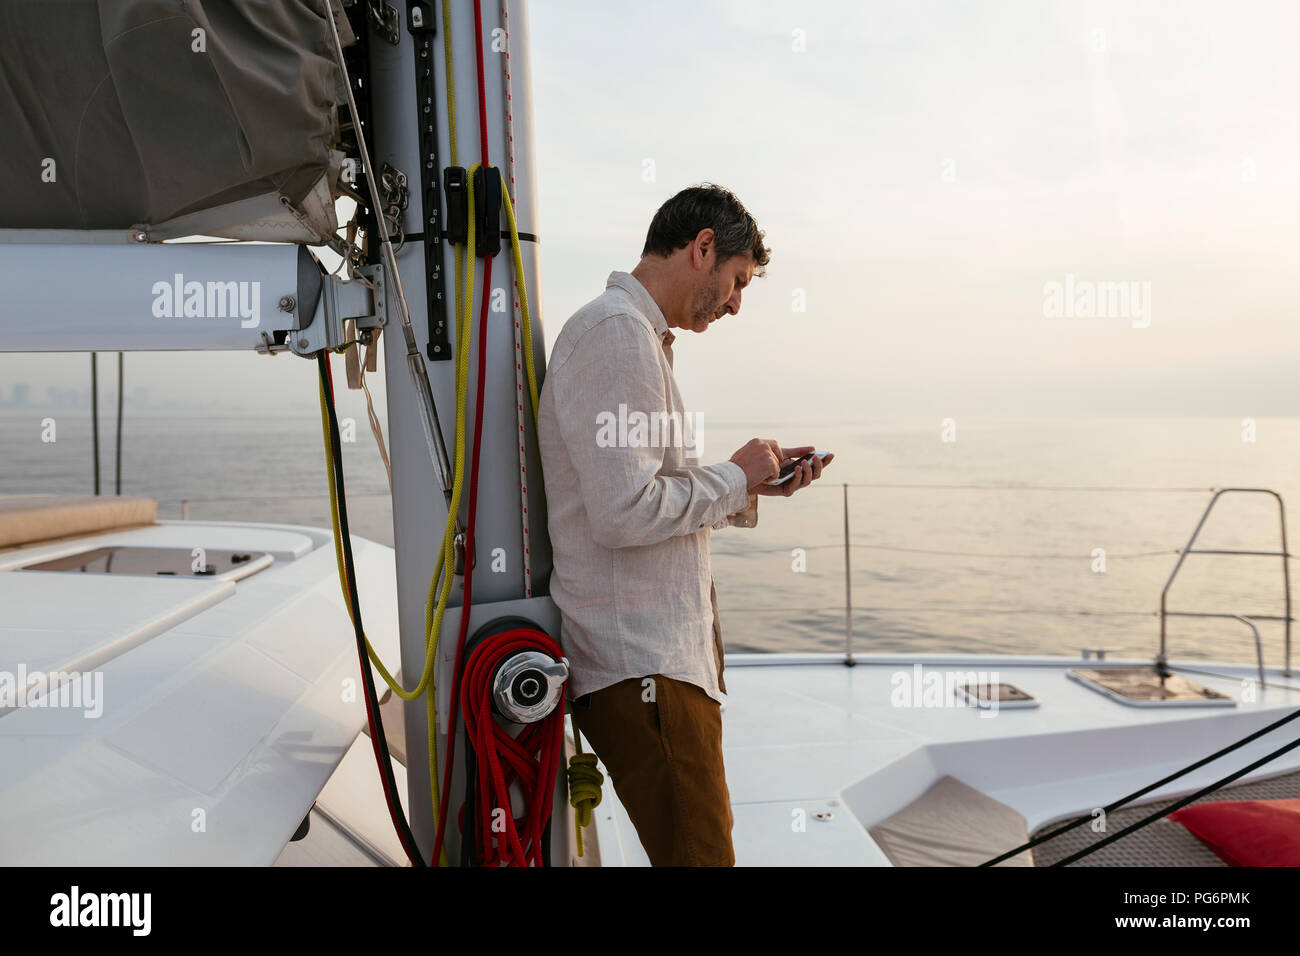 Marure man on catamaran, using smartphone Stock Photo